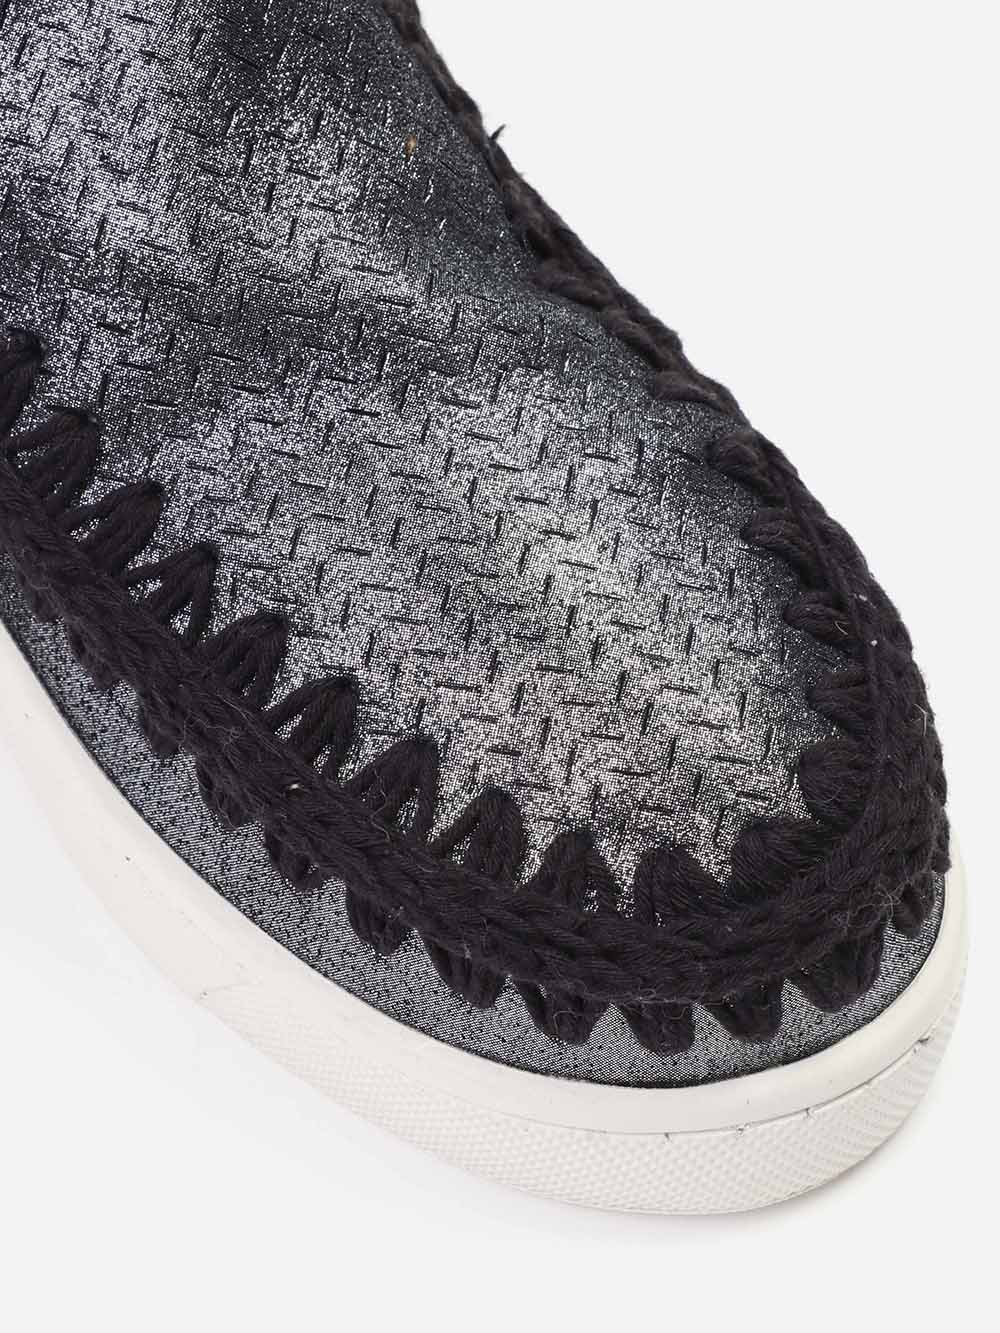 Microglitter black sneakers